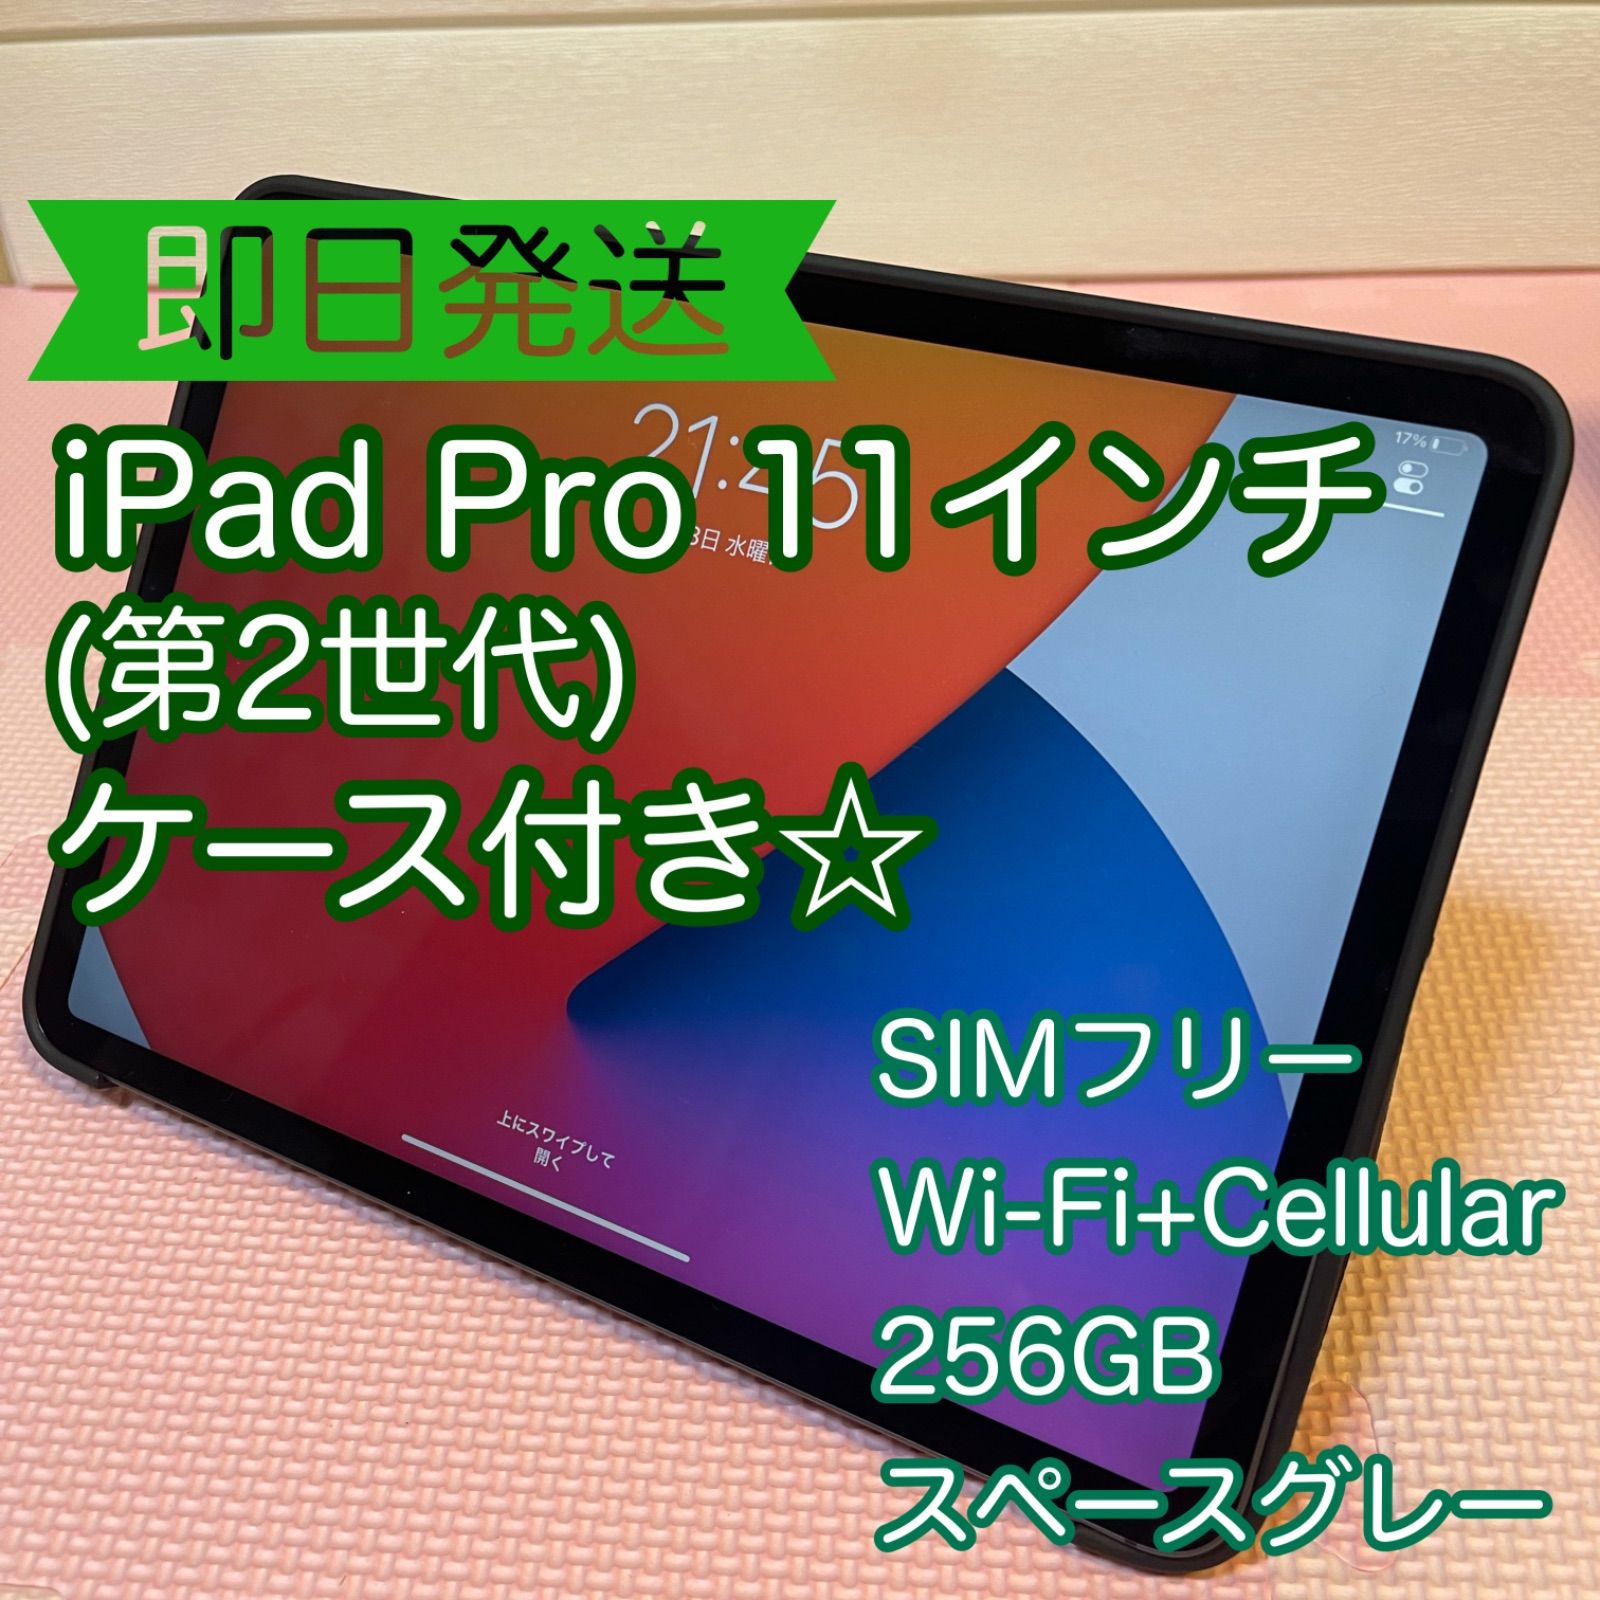 iPad Pro 11インチ 第2世代 256GB Wi-Fi セルラー グレー - ドール服